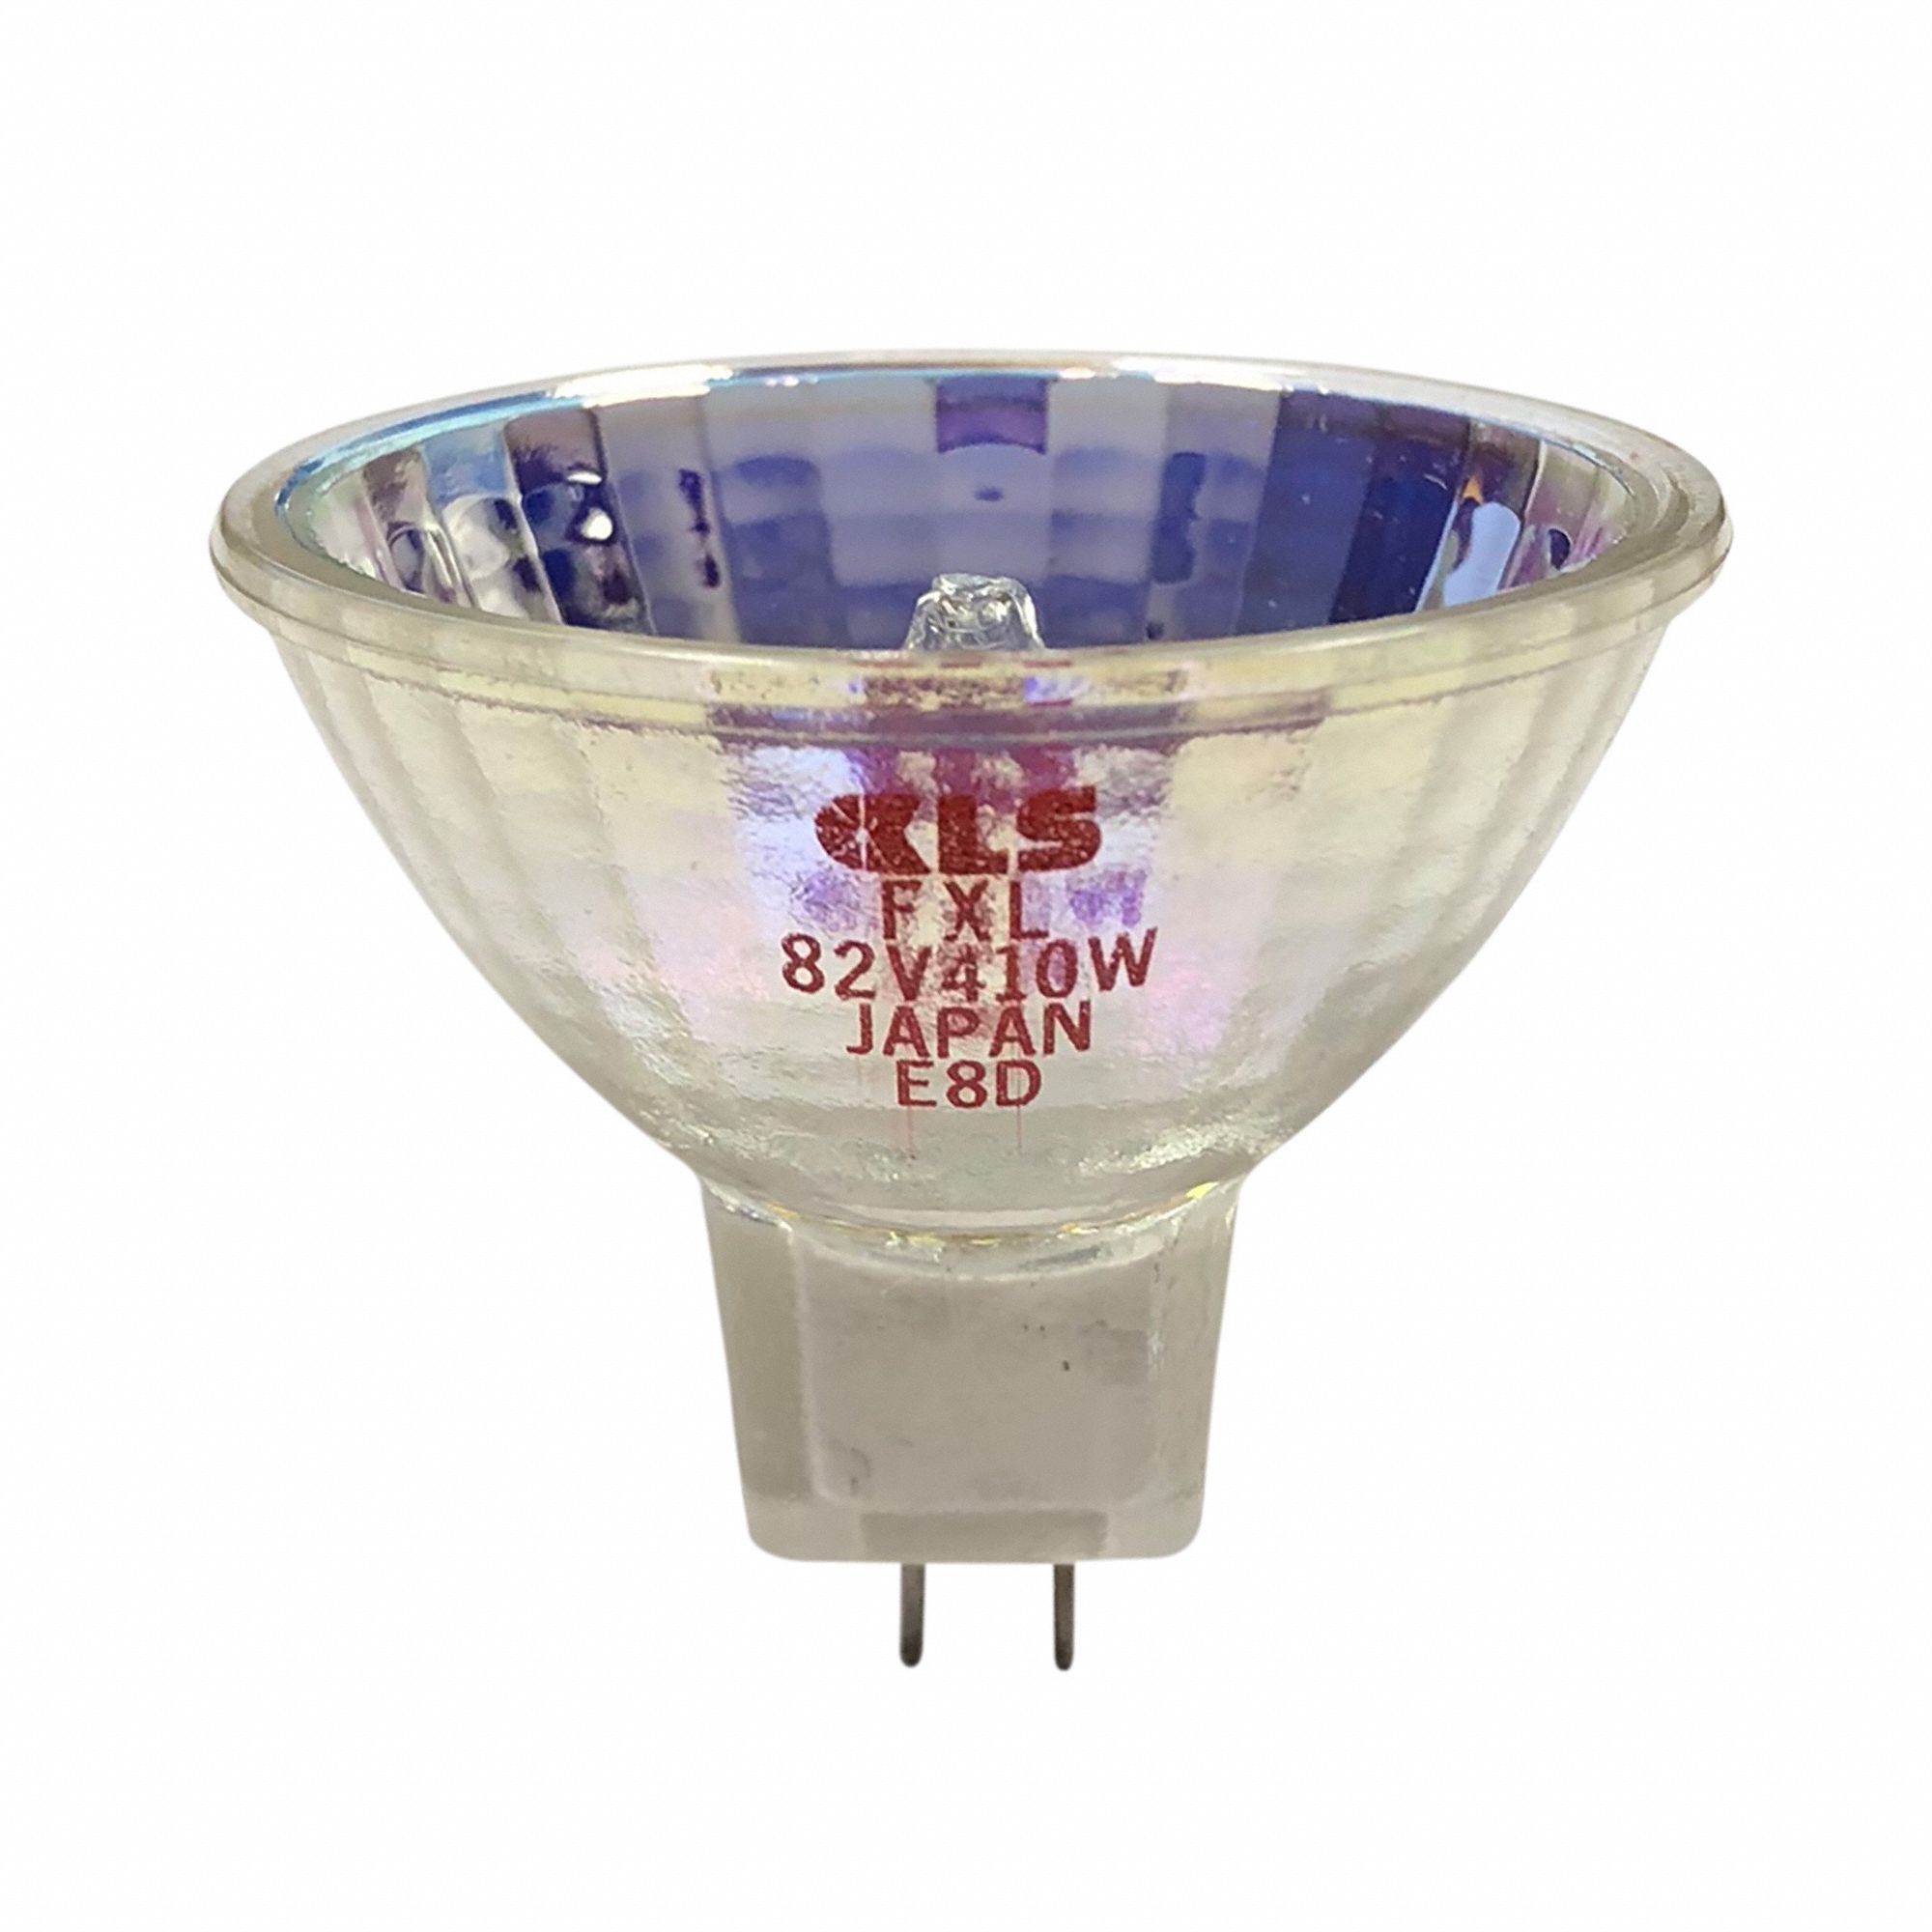 FXL Halogen Reflector Lamp: MR16, 2-Pin (GY5.3), 410 W Watts, Halogen